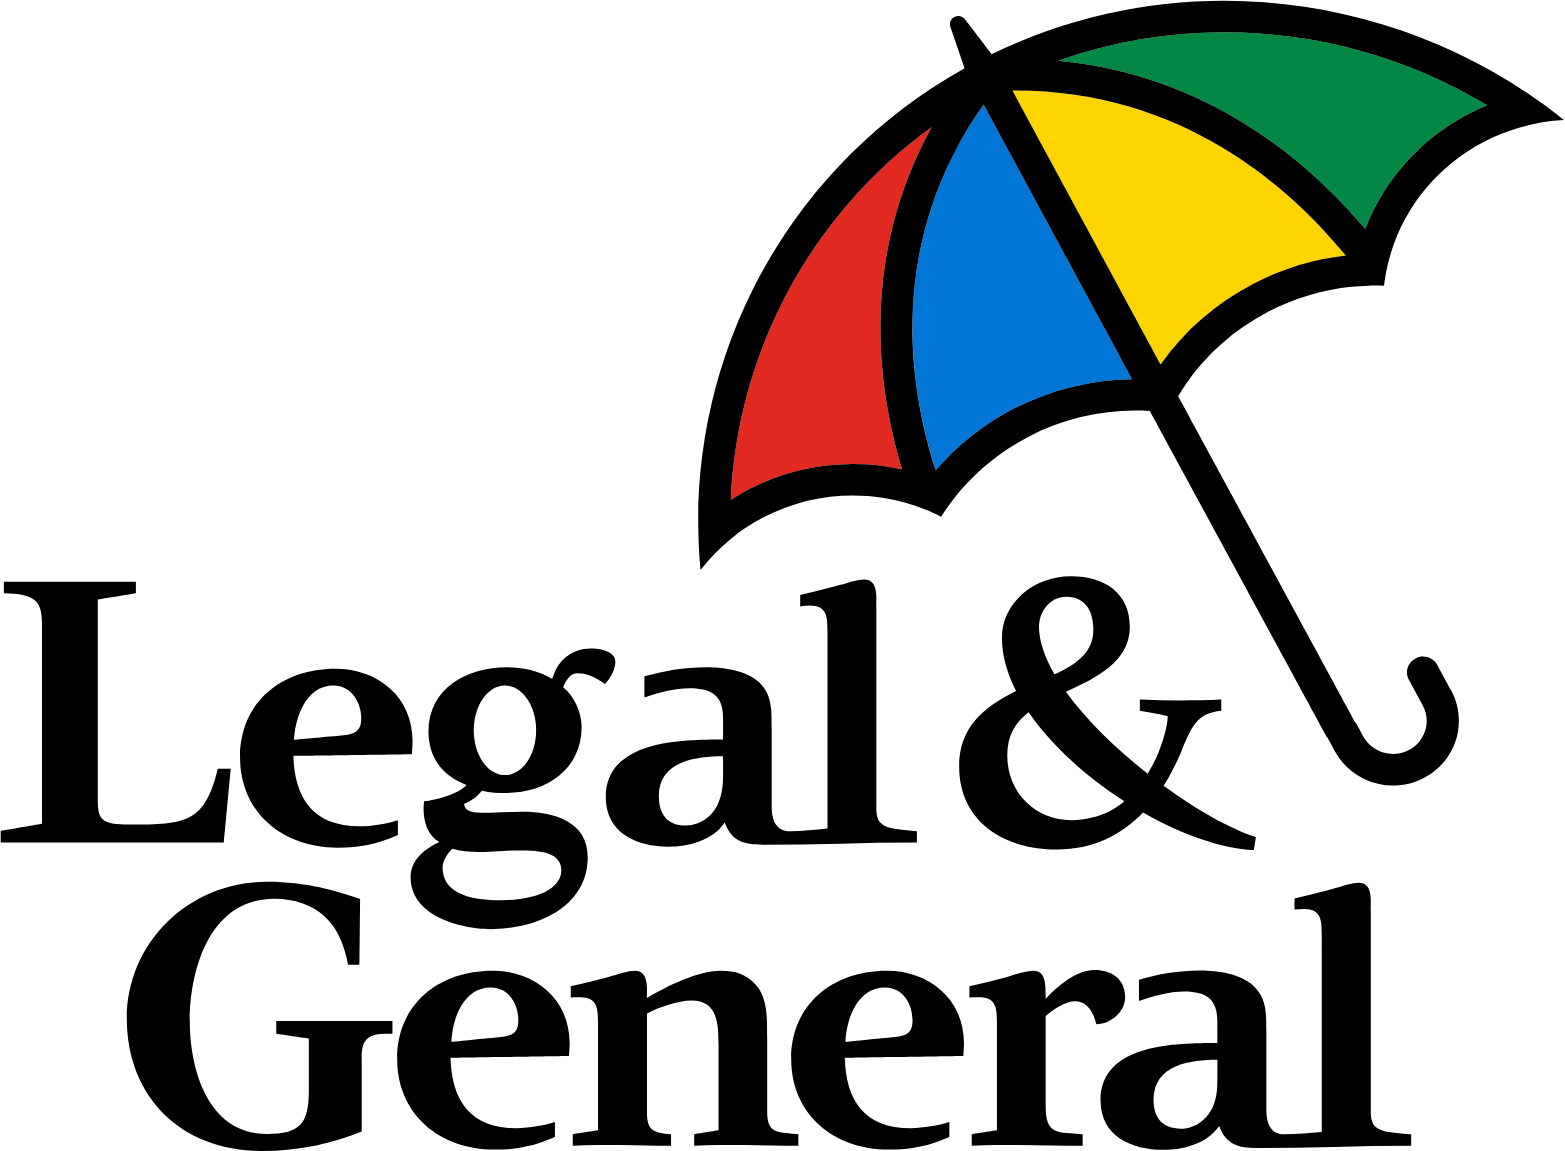 Legal & General logo large (transparent PNG)